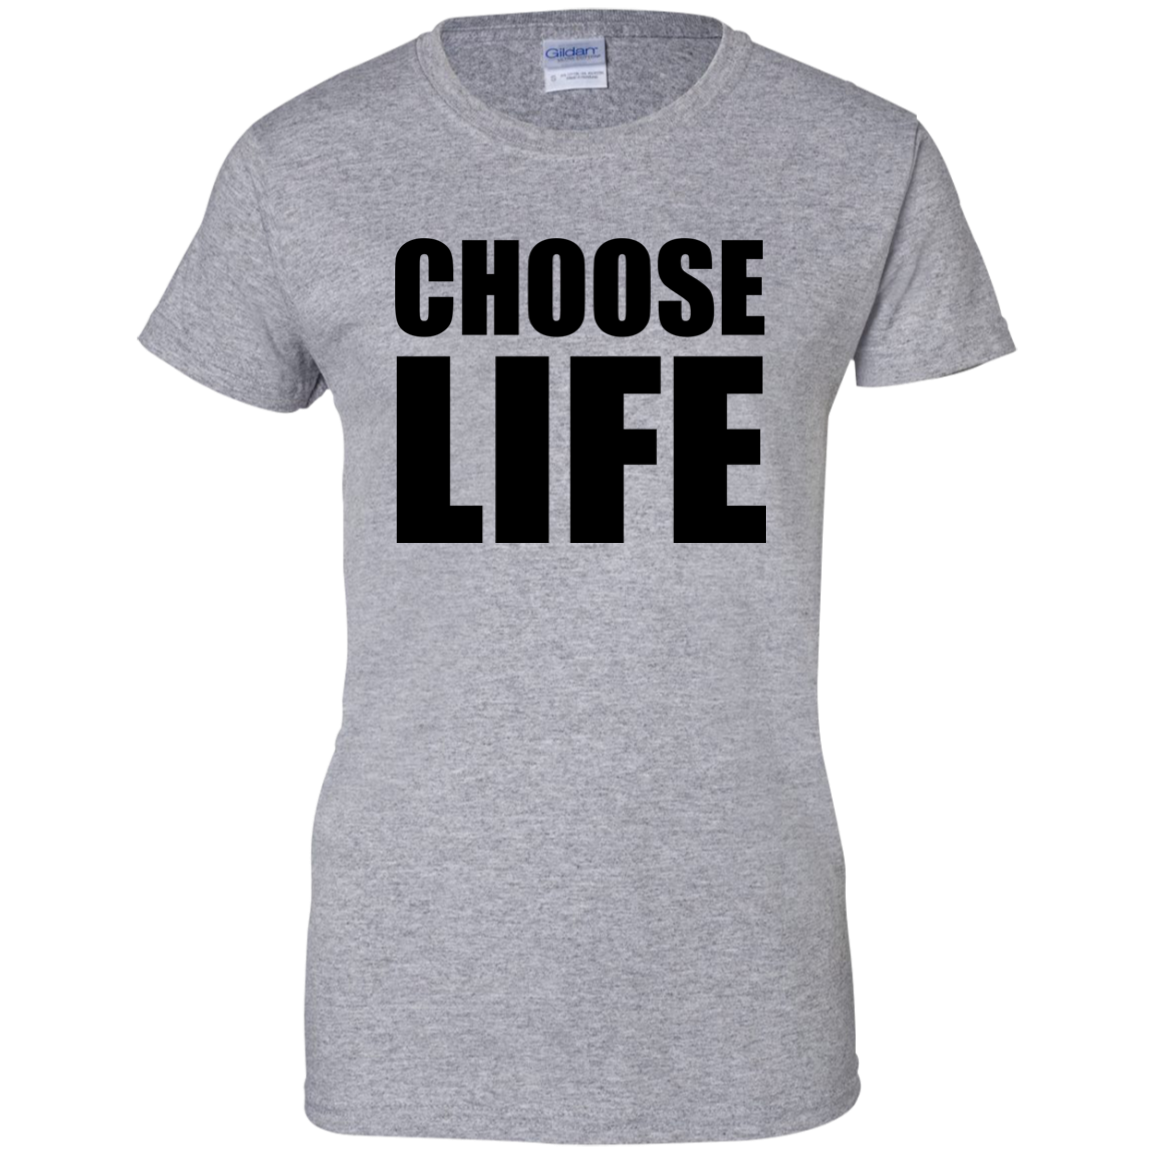 Choose of life 3